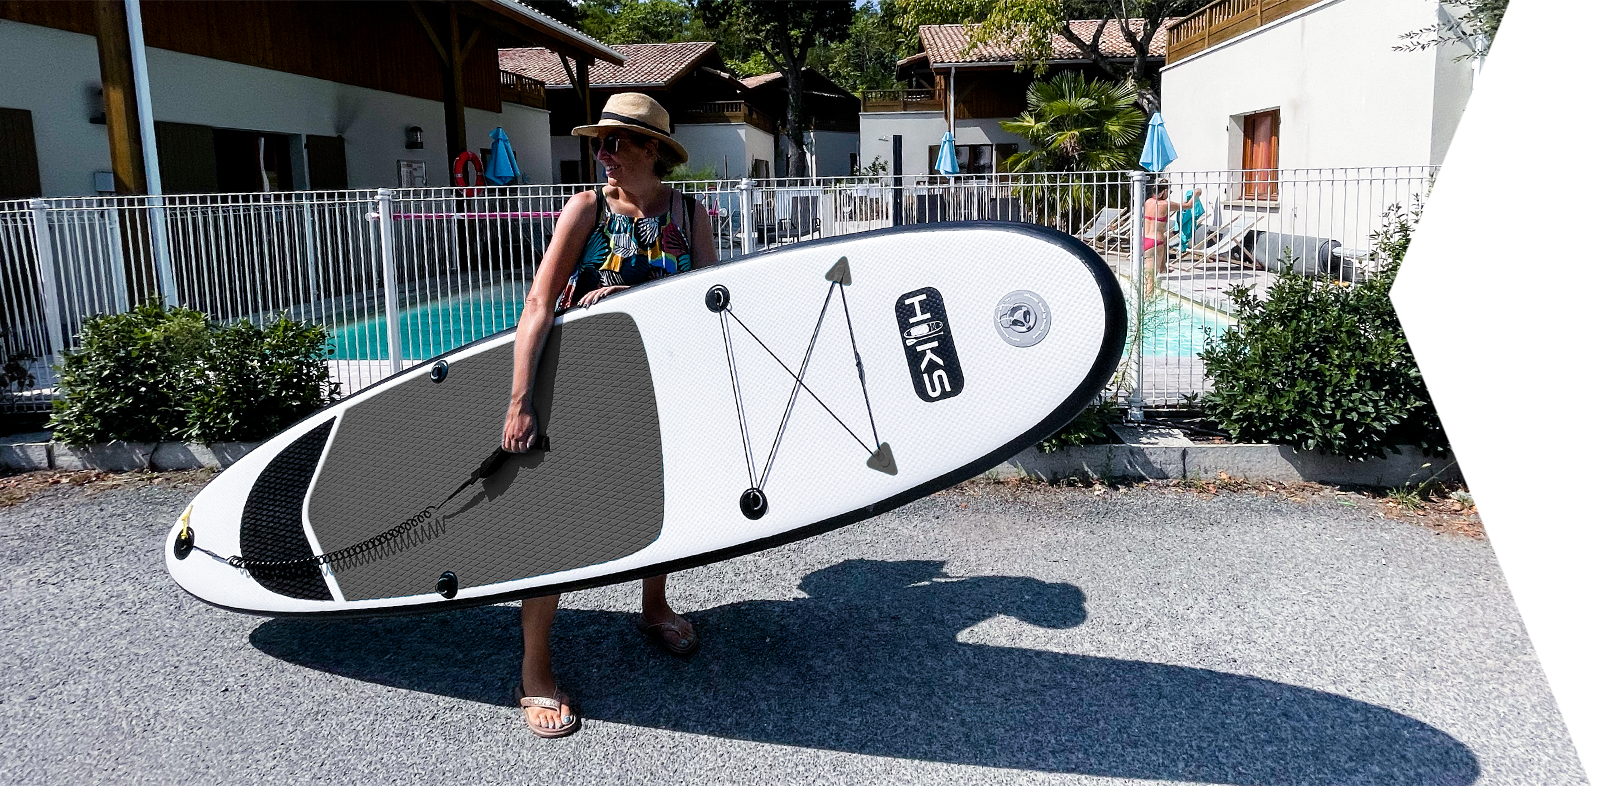 Blue / Inflatable Set Paddleboard / HIKS Ocean – gohiks 10ft Up Stand SUP